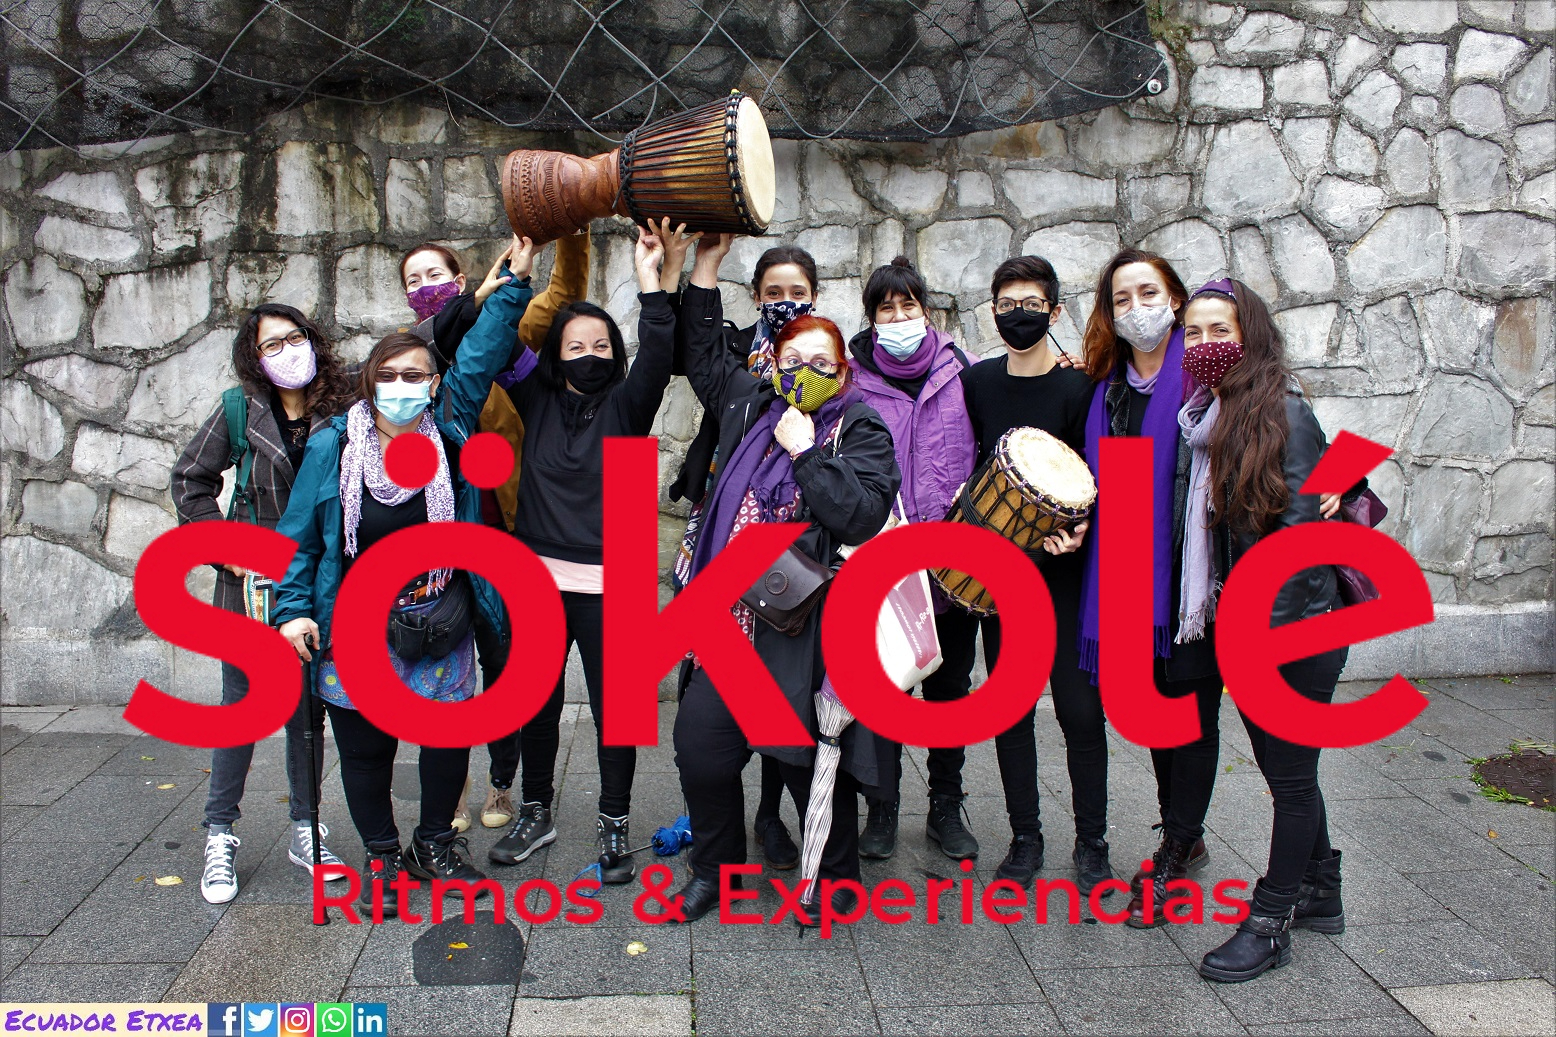 sokole-ritmos-experiencias-percusión-africana-mujeres-tambores-bilbao-euskalherria-guatemala-igualdad-feminismo-elena-sheyla-memoria